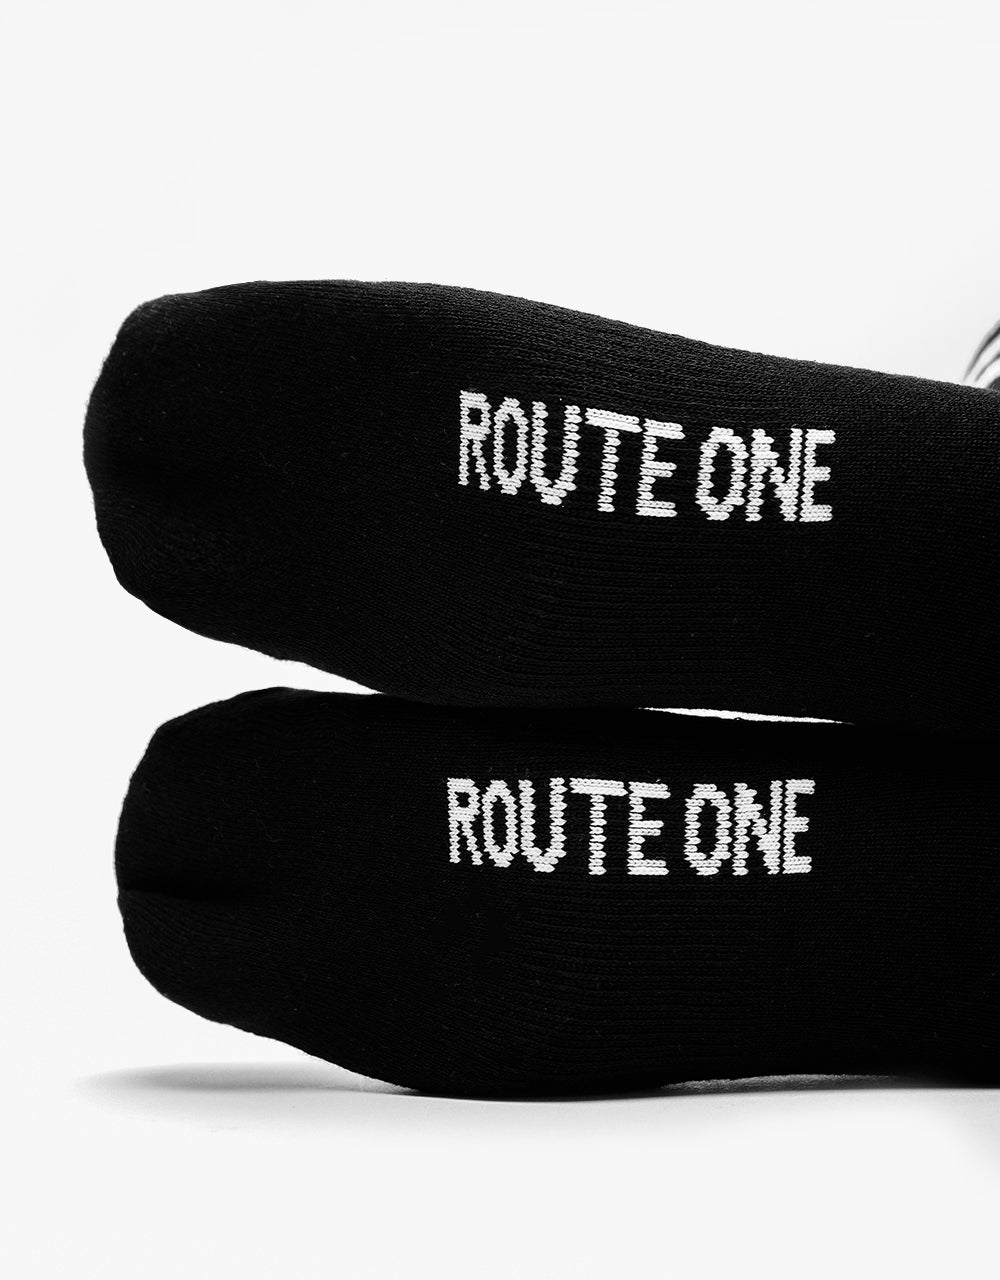 Route One Classic Crew Socks - Black/White